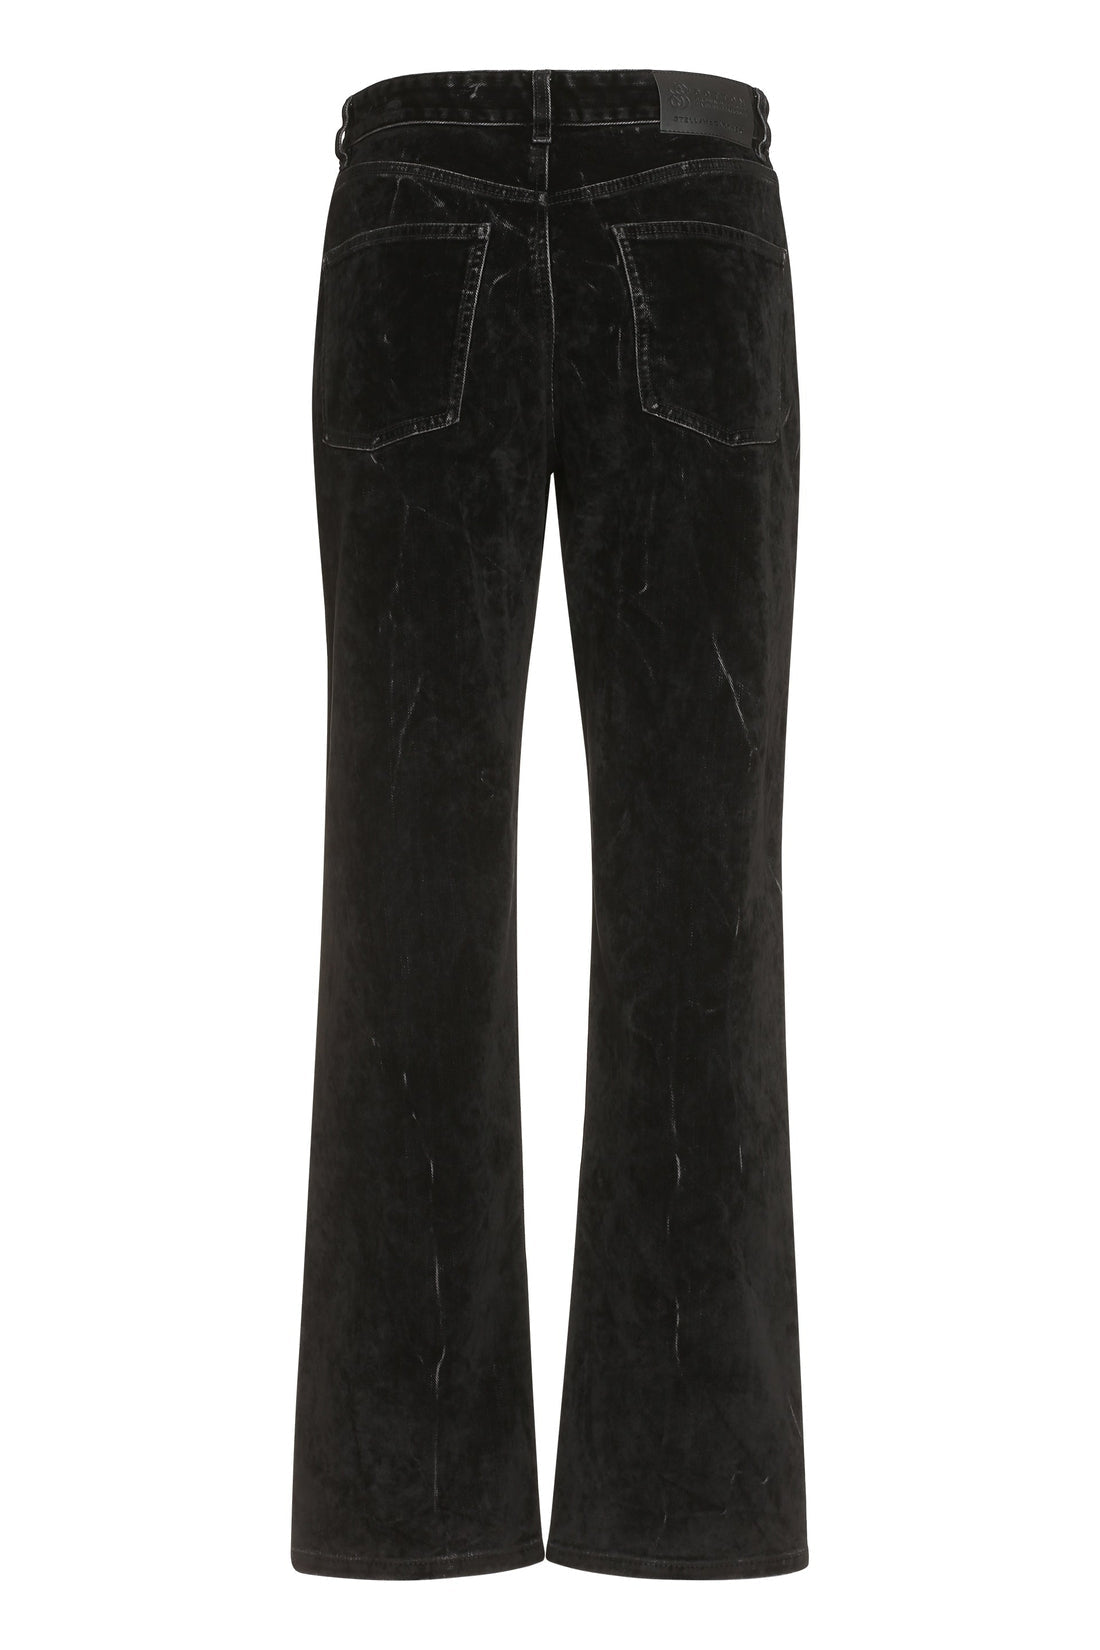 Stella McCartney-OUTLET-SALE-5-pocket straight-leg jeans-ARCHIVIST